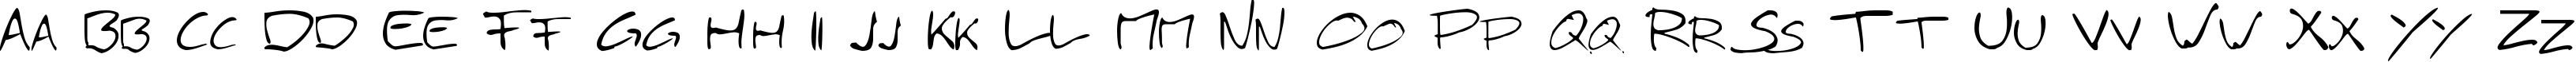 Пример написания английского алфавита шрифтом Simply21